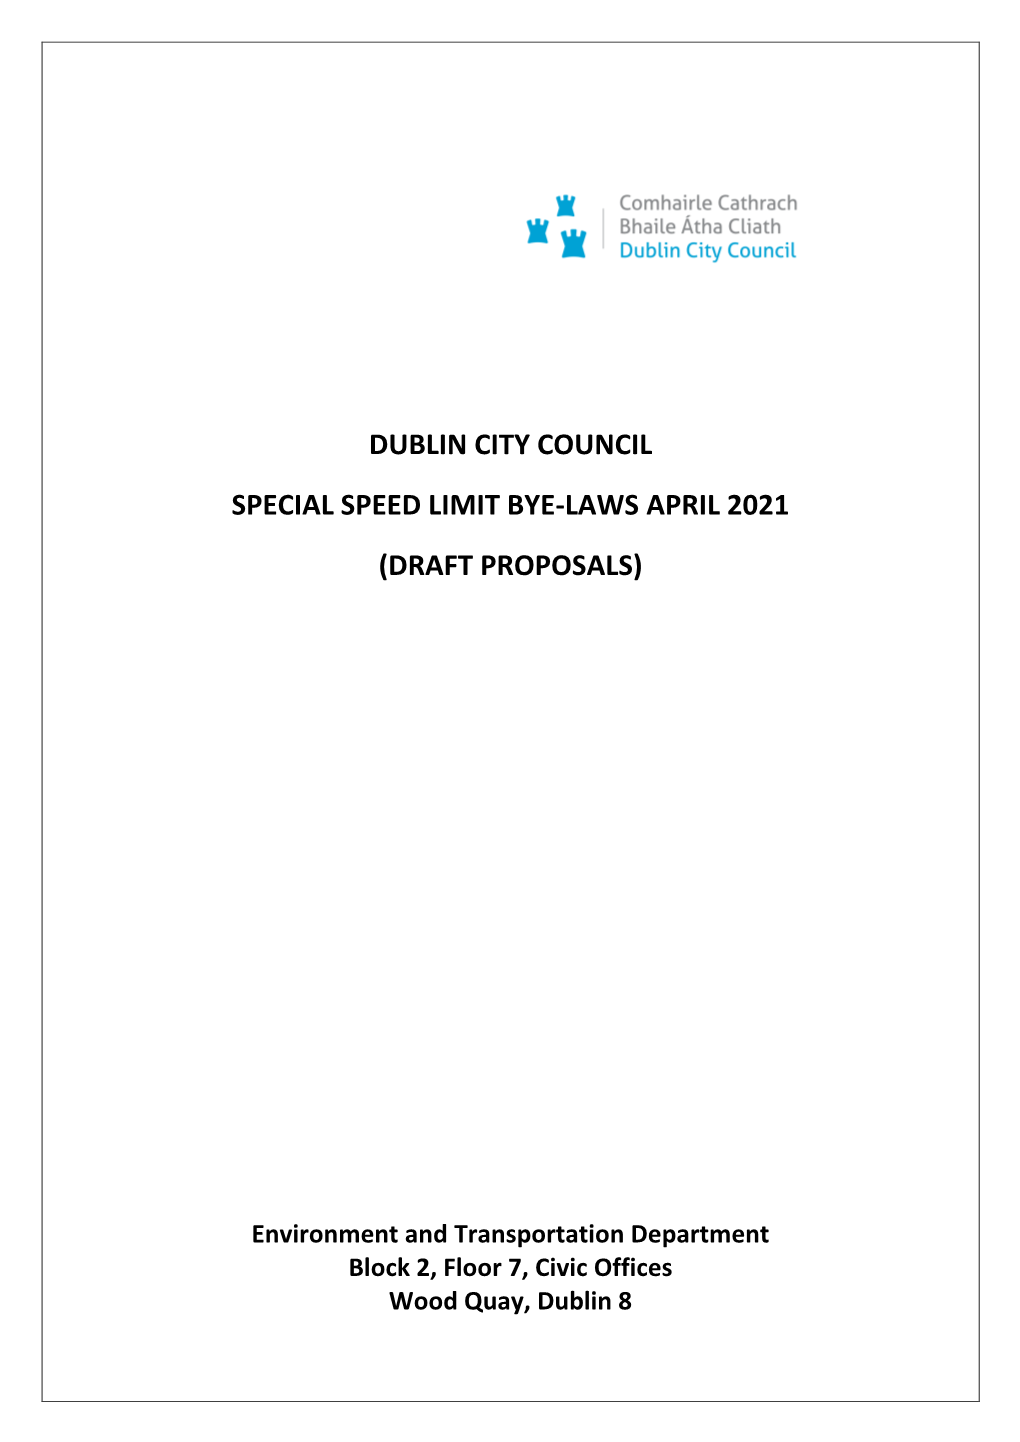 Dublin City Council Special Speed Limit Bye-Laws April 2021 (Draft Proposals)